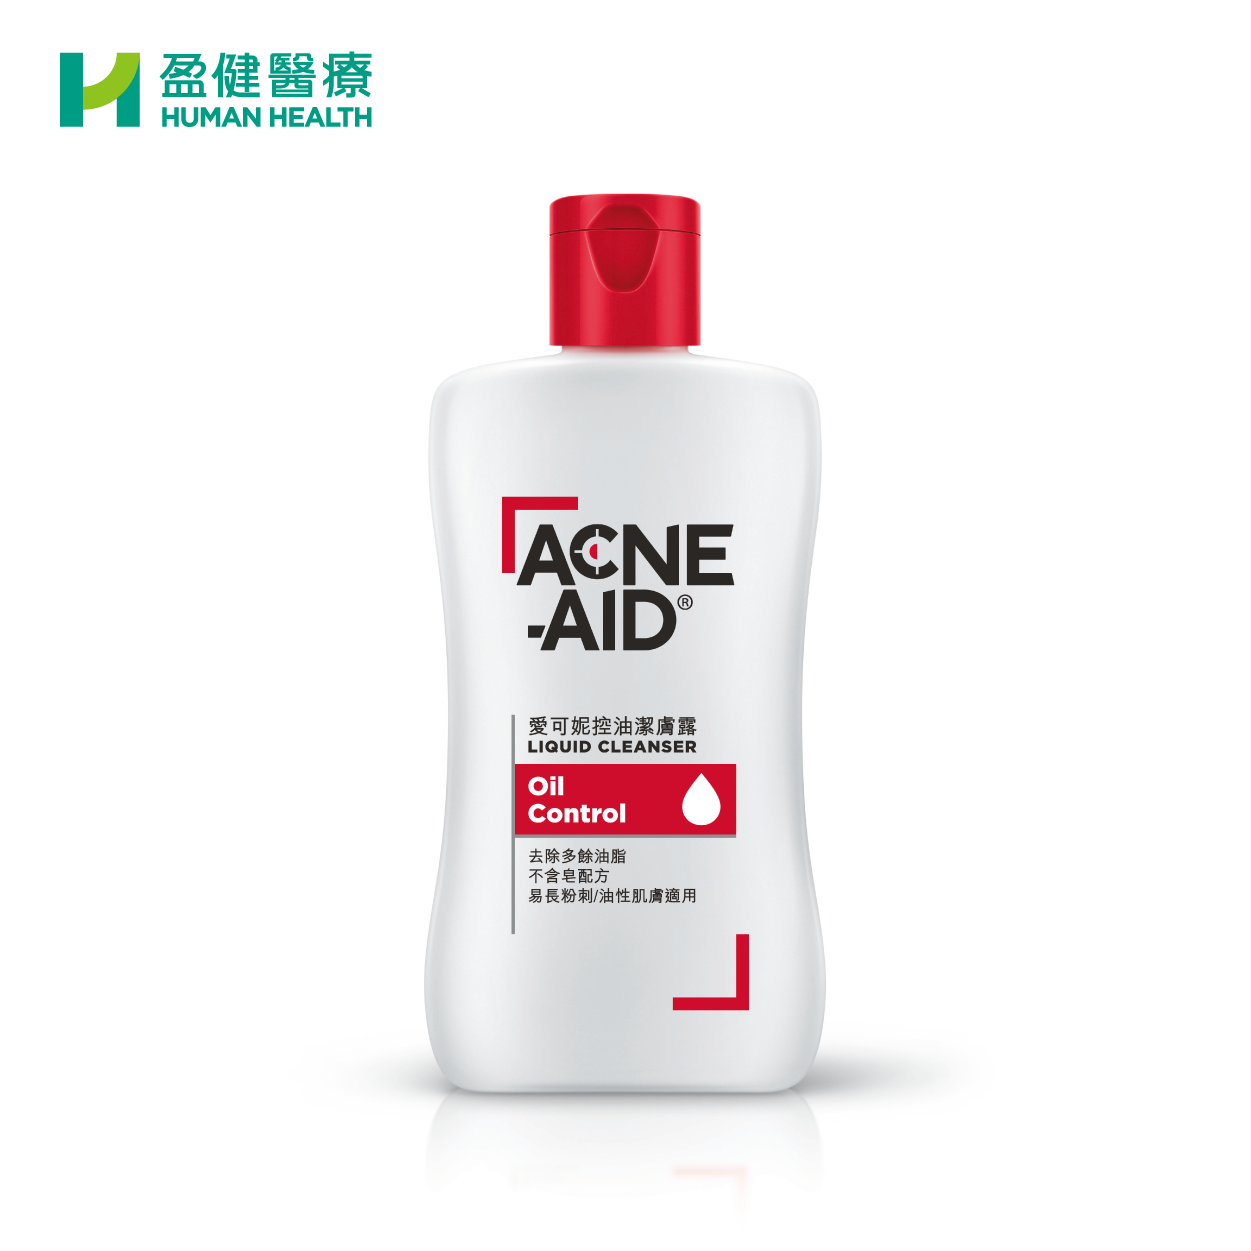 Acne-Aid Oil Control Cleanser (H-ACN003)